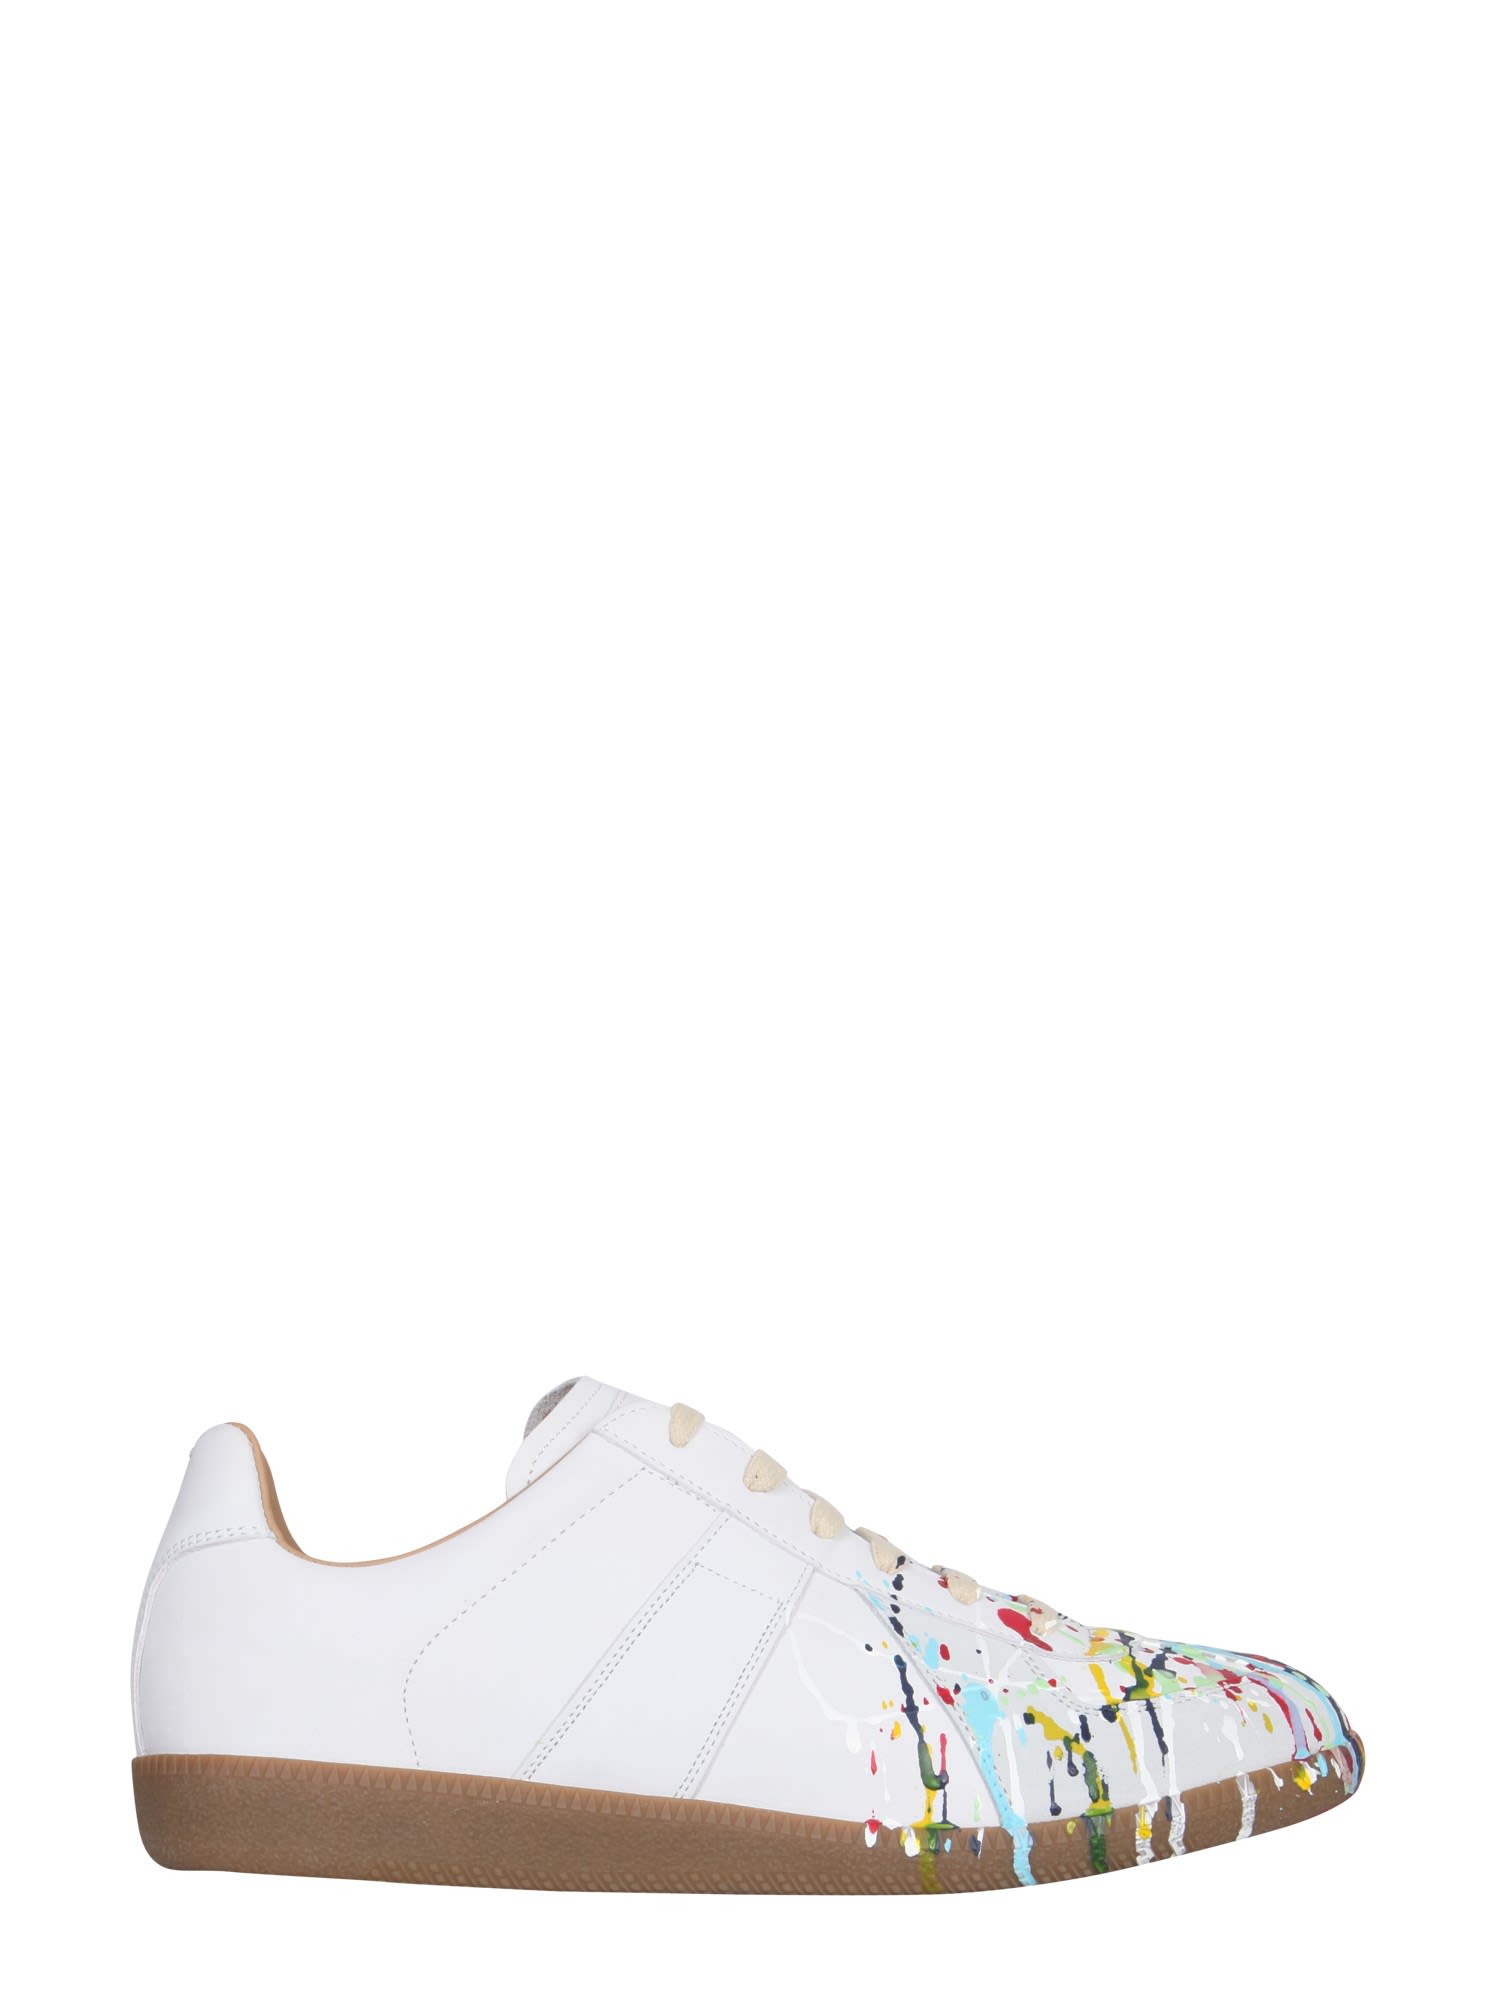 Maison Sneakers In White | ModeSens